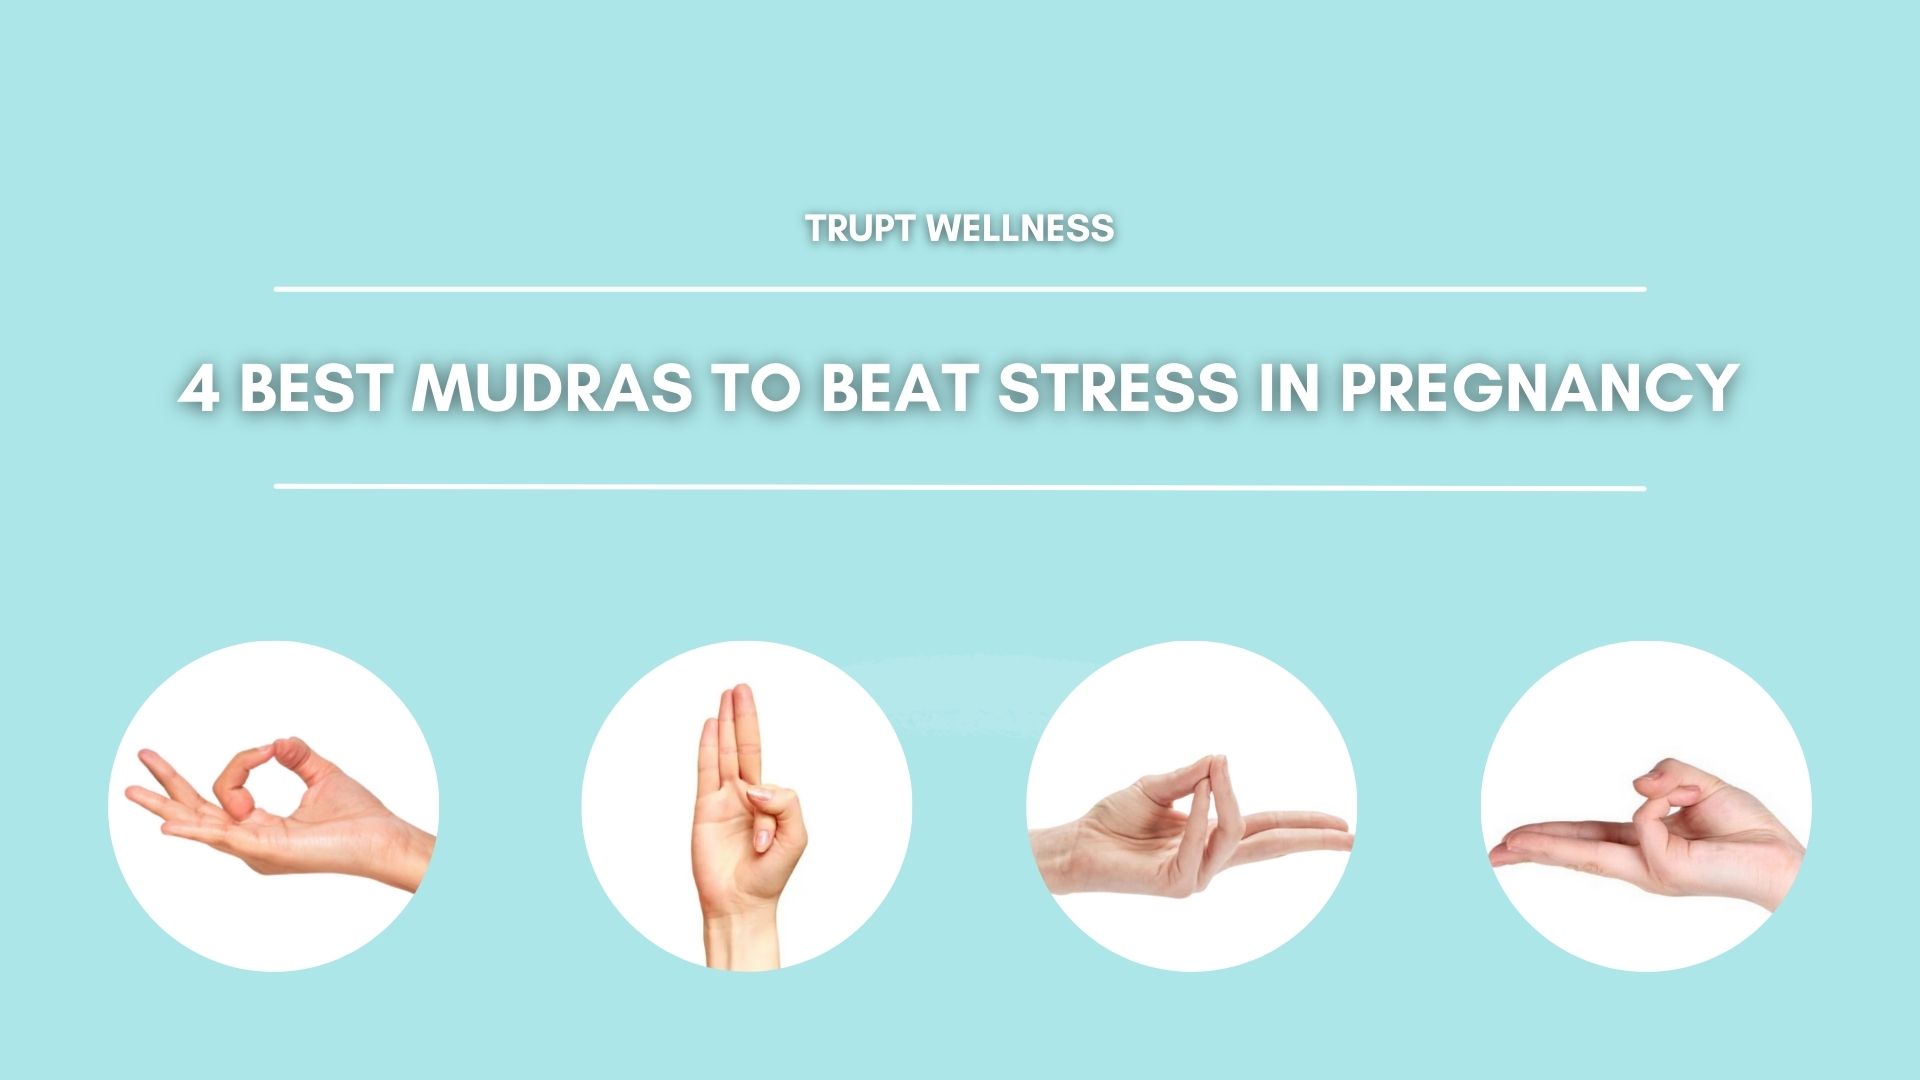 Udana Vayu Mudra - Hand gesture for Udana Flow